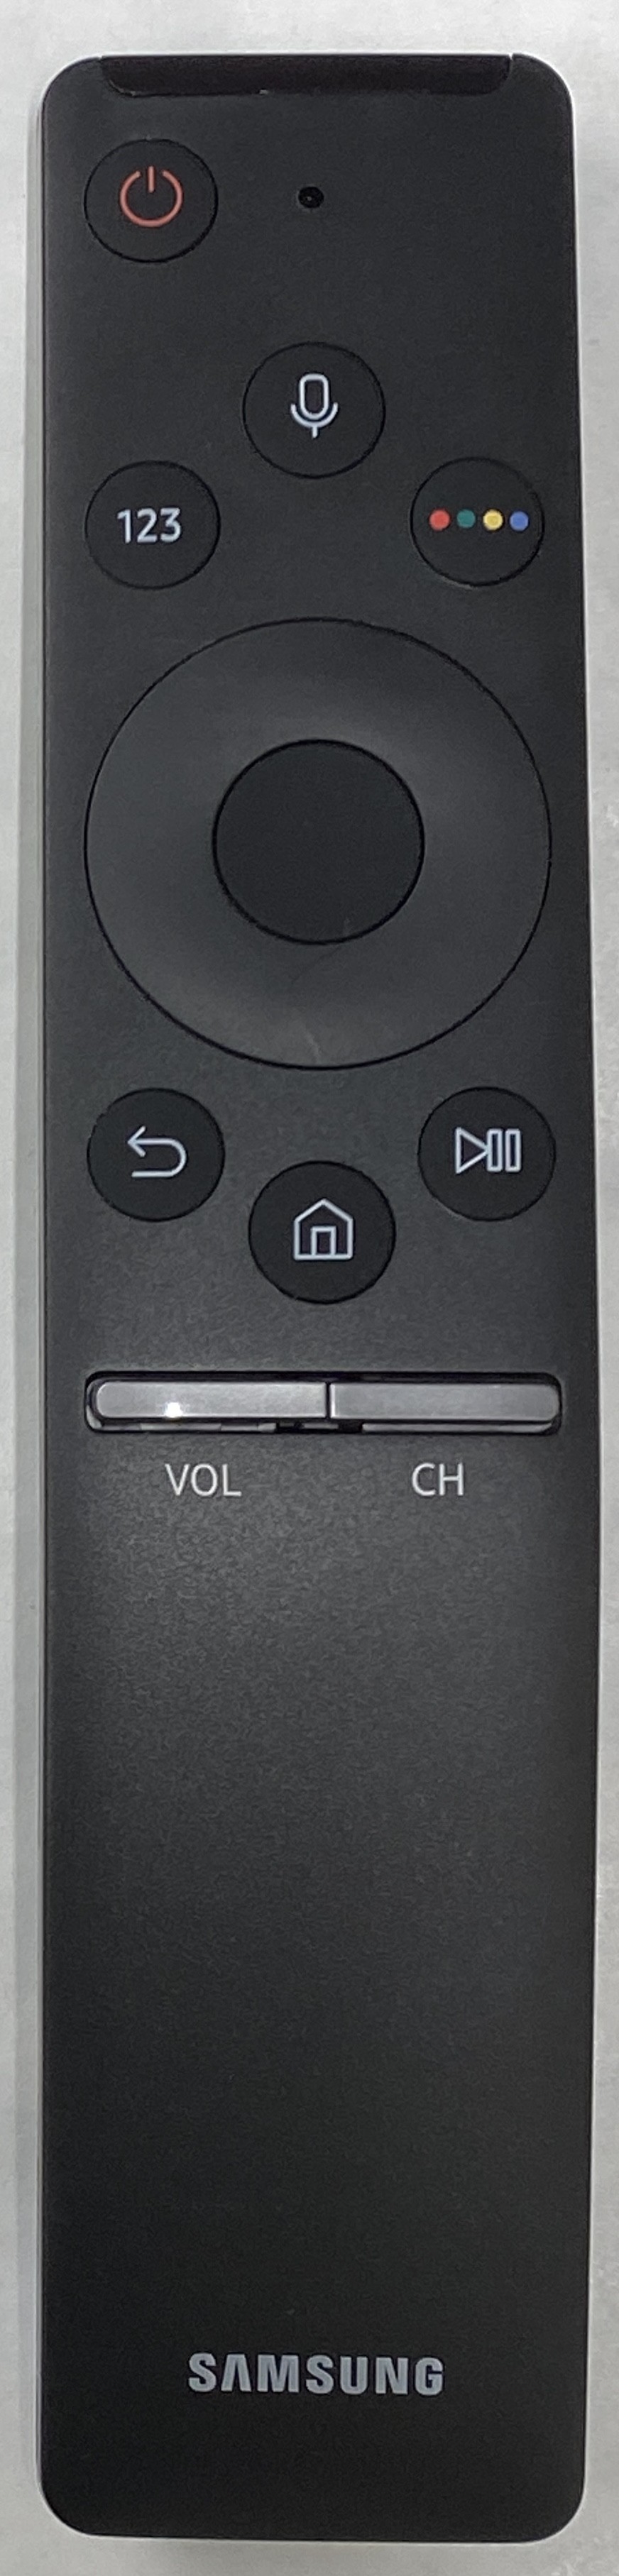 SAMSUNG UE50MU6102 Smart Remote Control Original